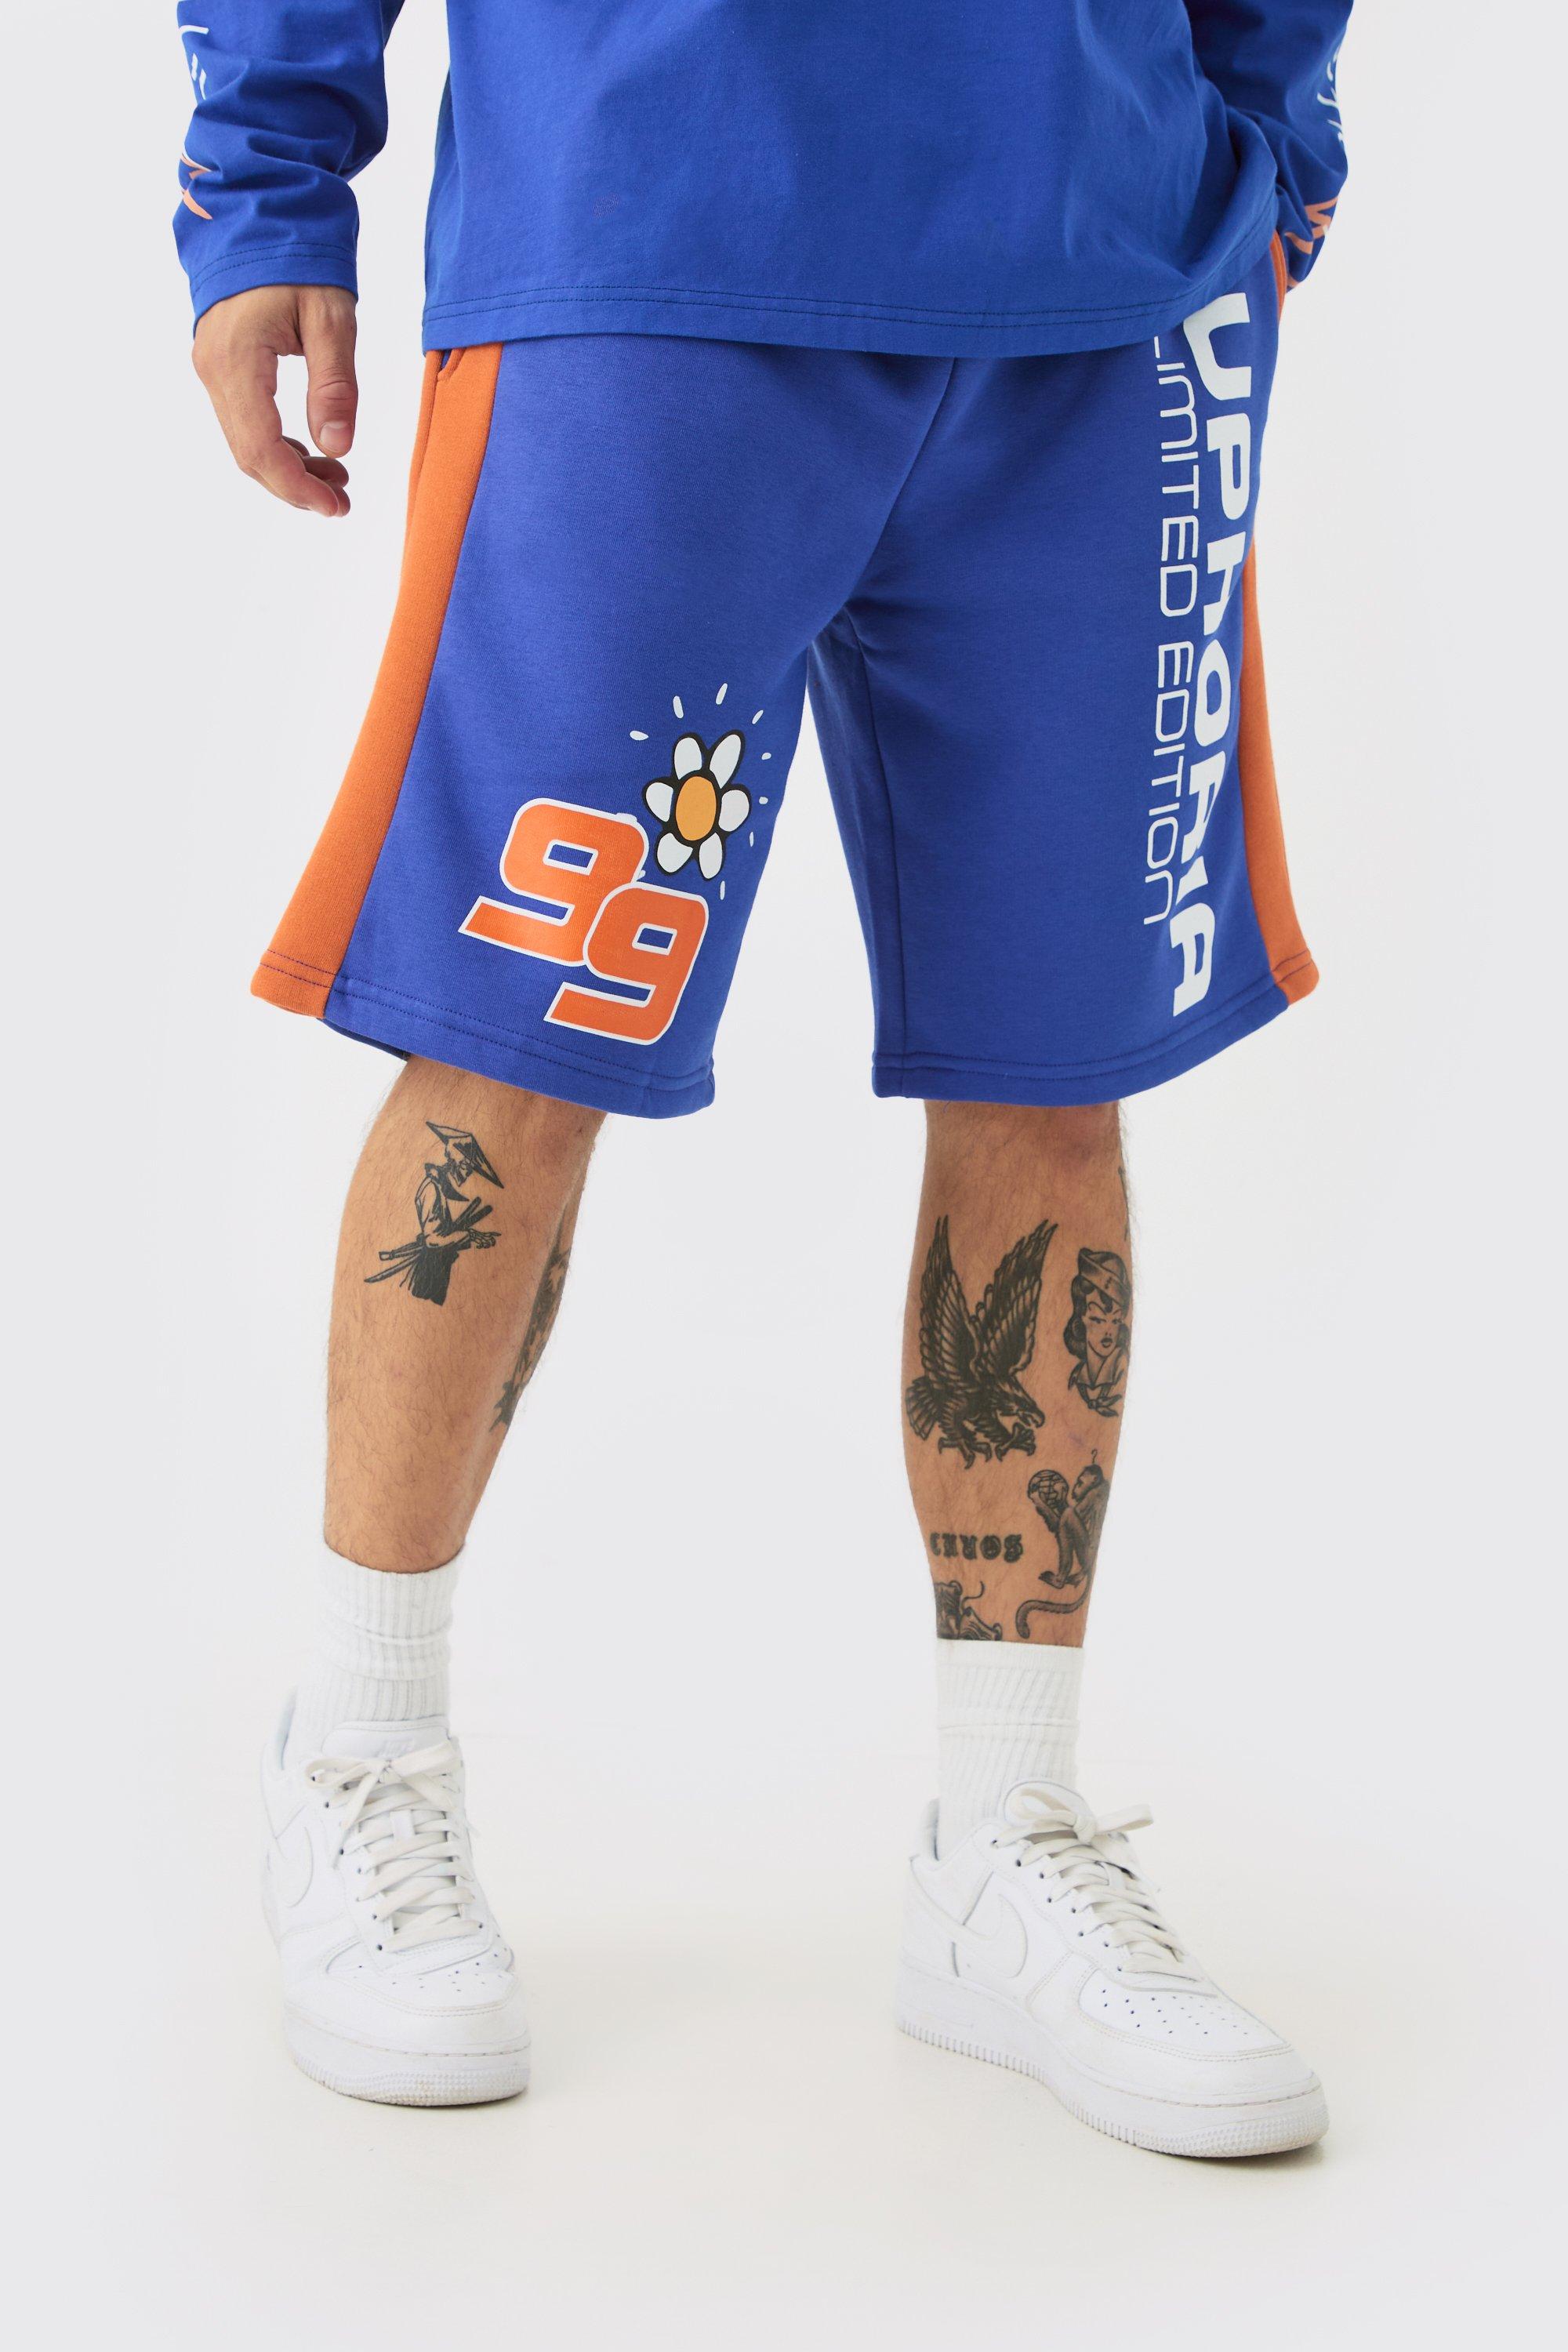 Image of Euphoria Graphic Long Length Basketball Shorts, Azzurro